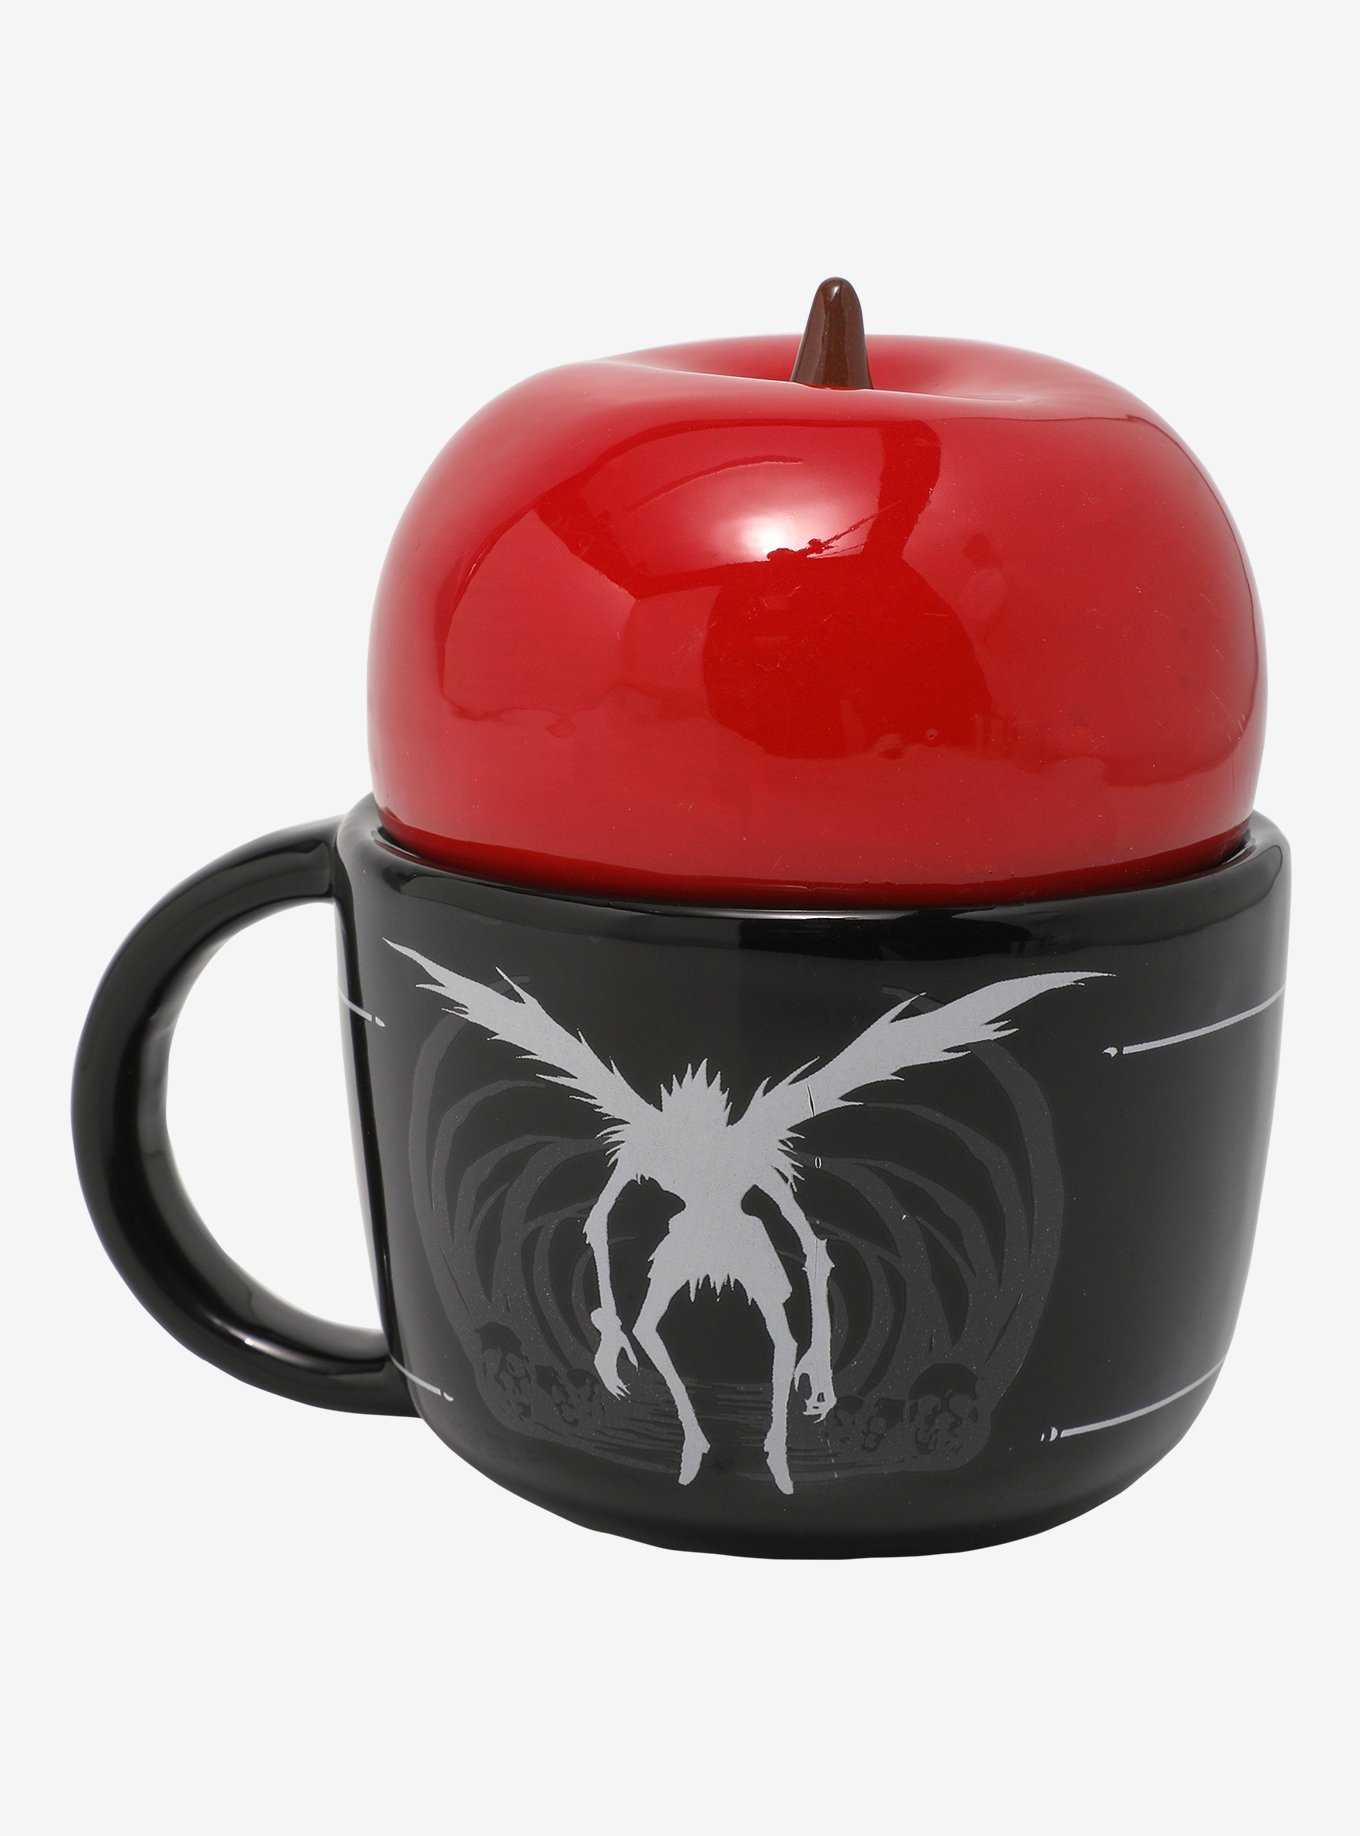 Death Note Apple Mug, , hi-res